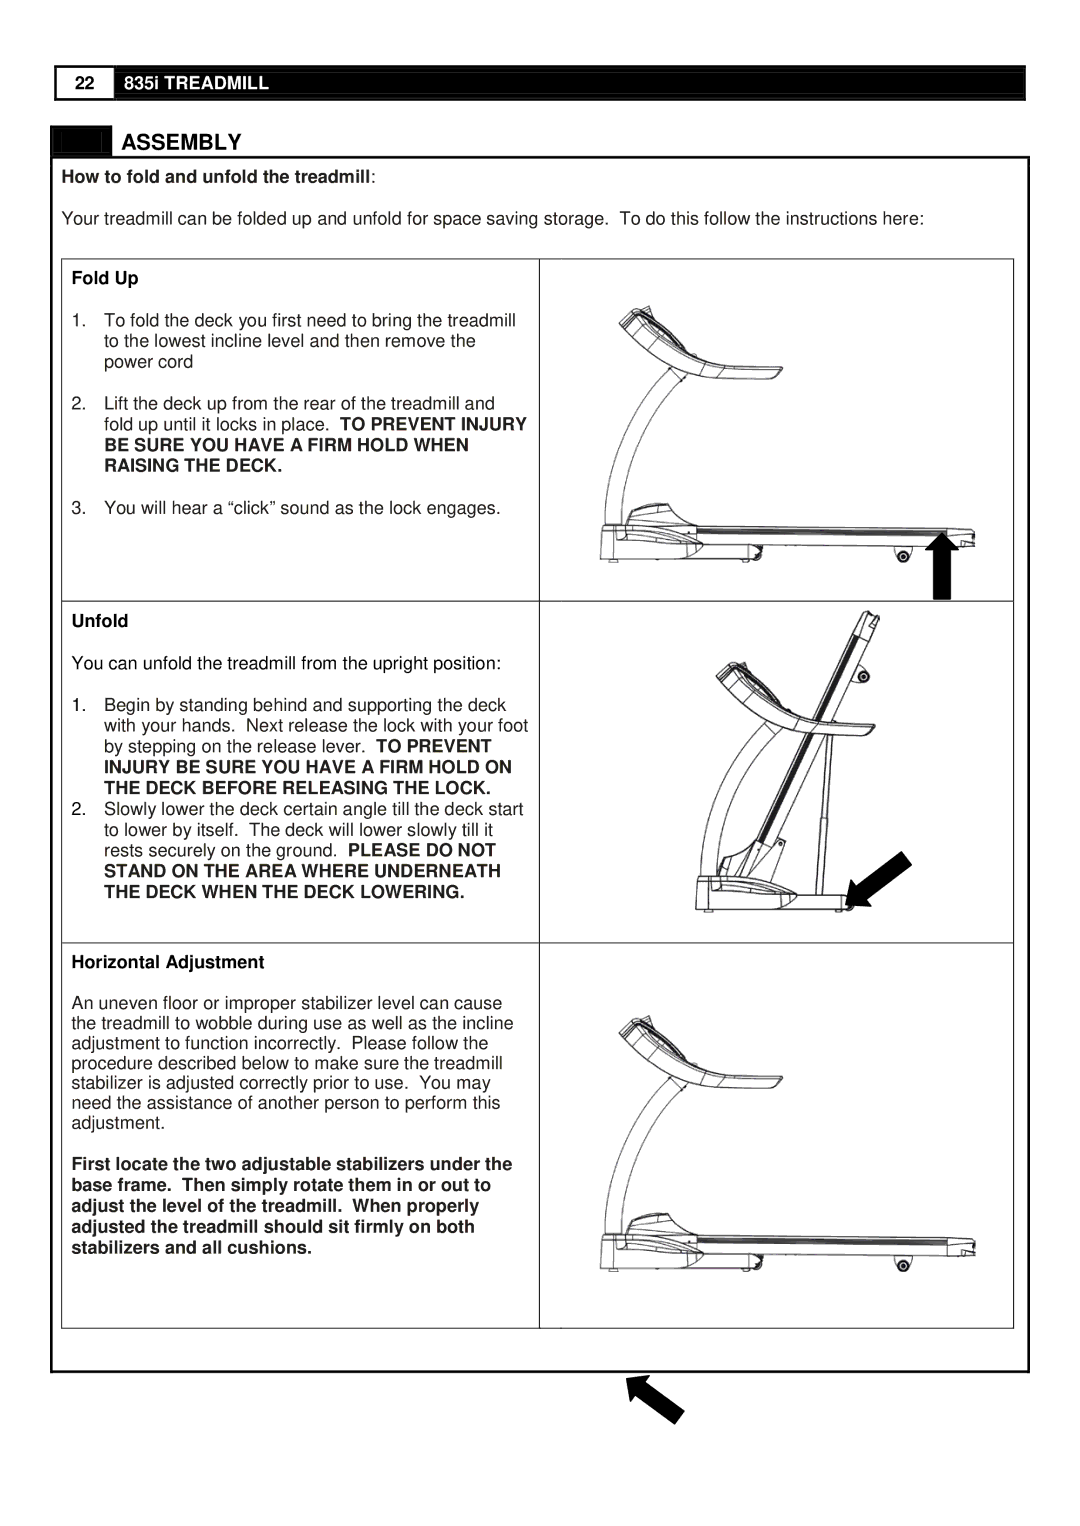 Smooth Fitness 835 user manual Fold Up, Unfold, Horizontal Adjustment 